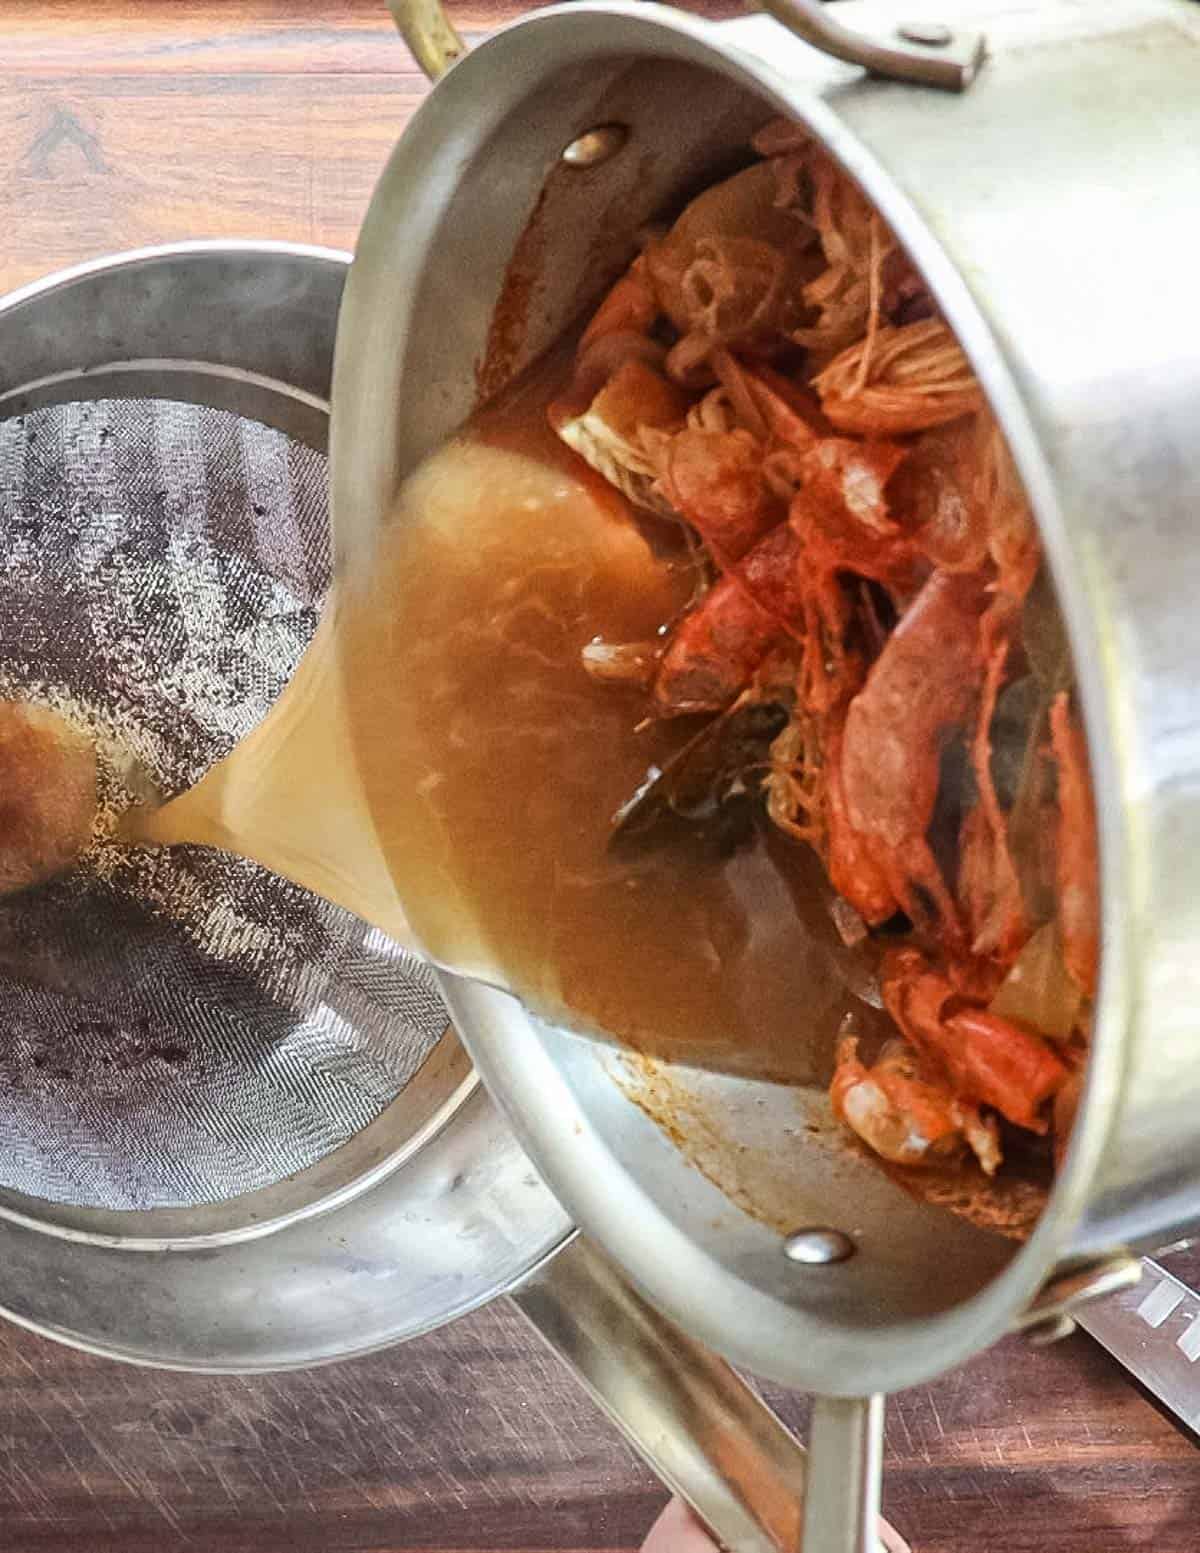 Straining shrimp stock through a chinois strainer. 